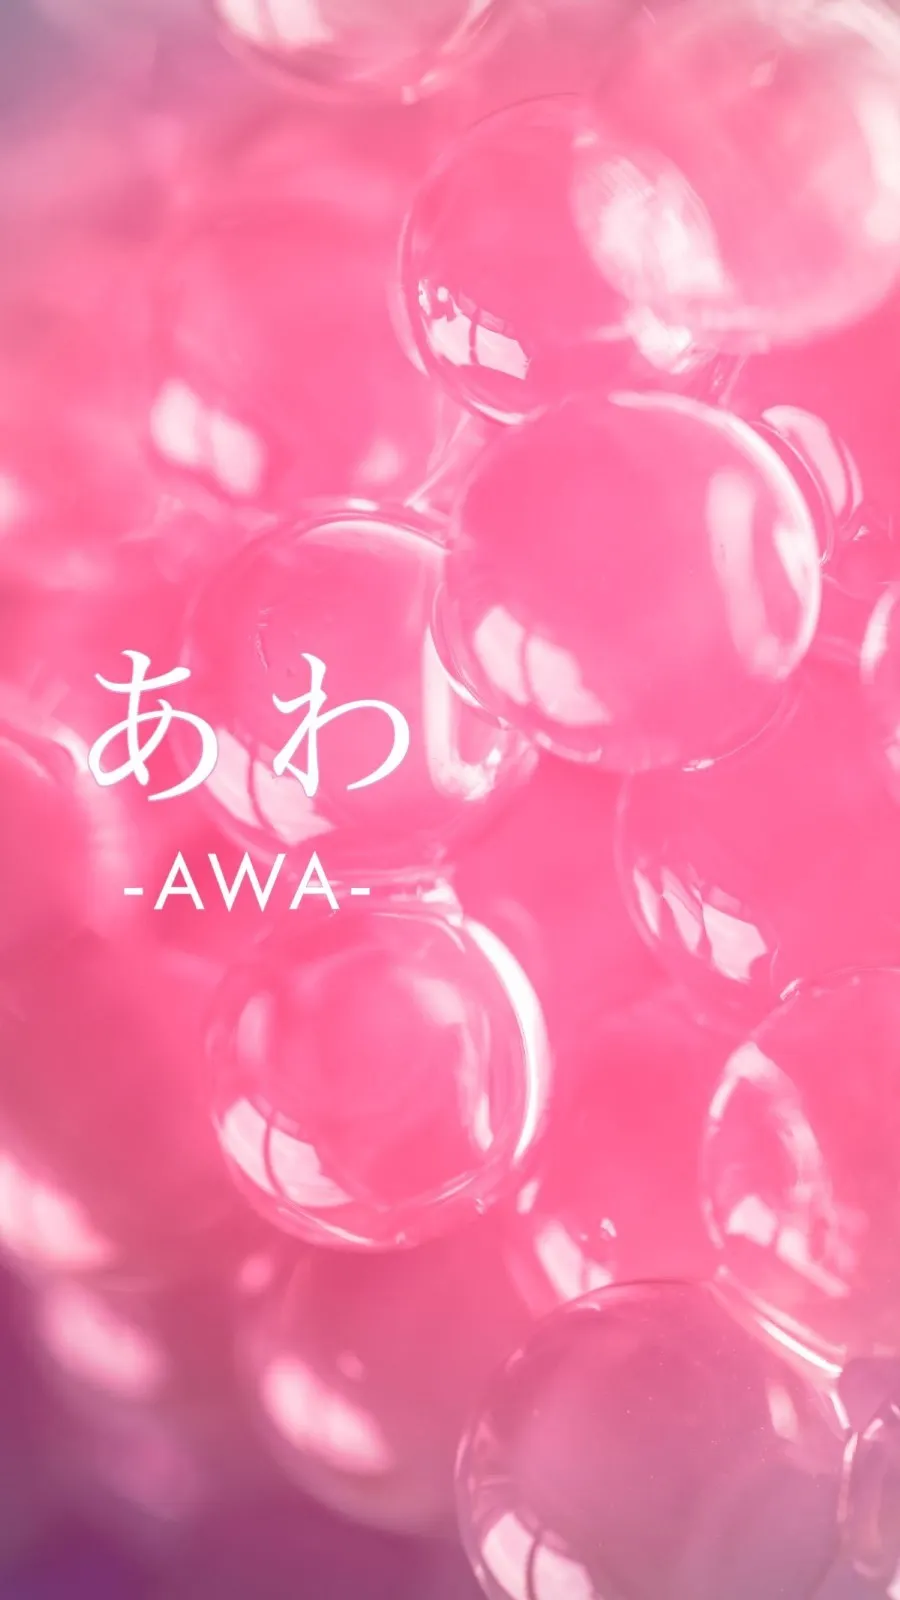 Bobble pink Awa illustration